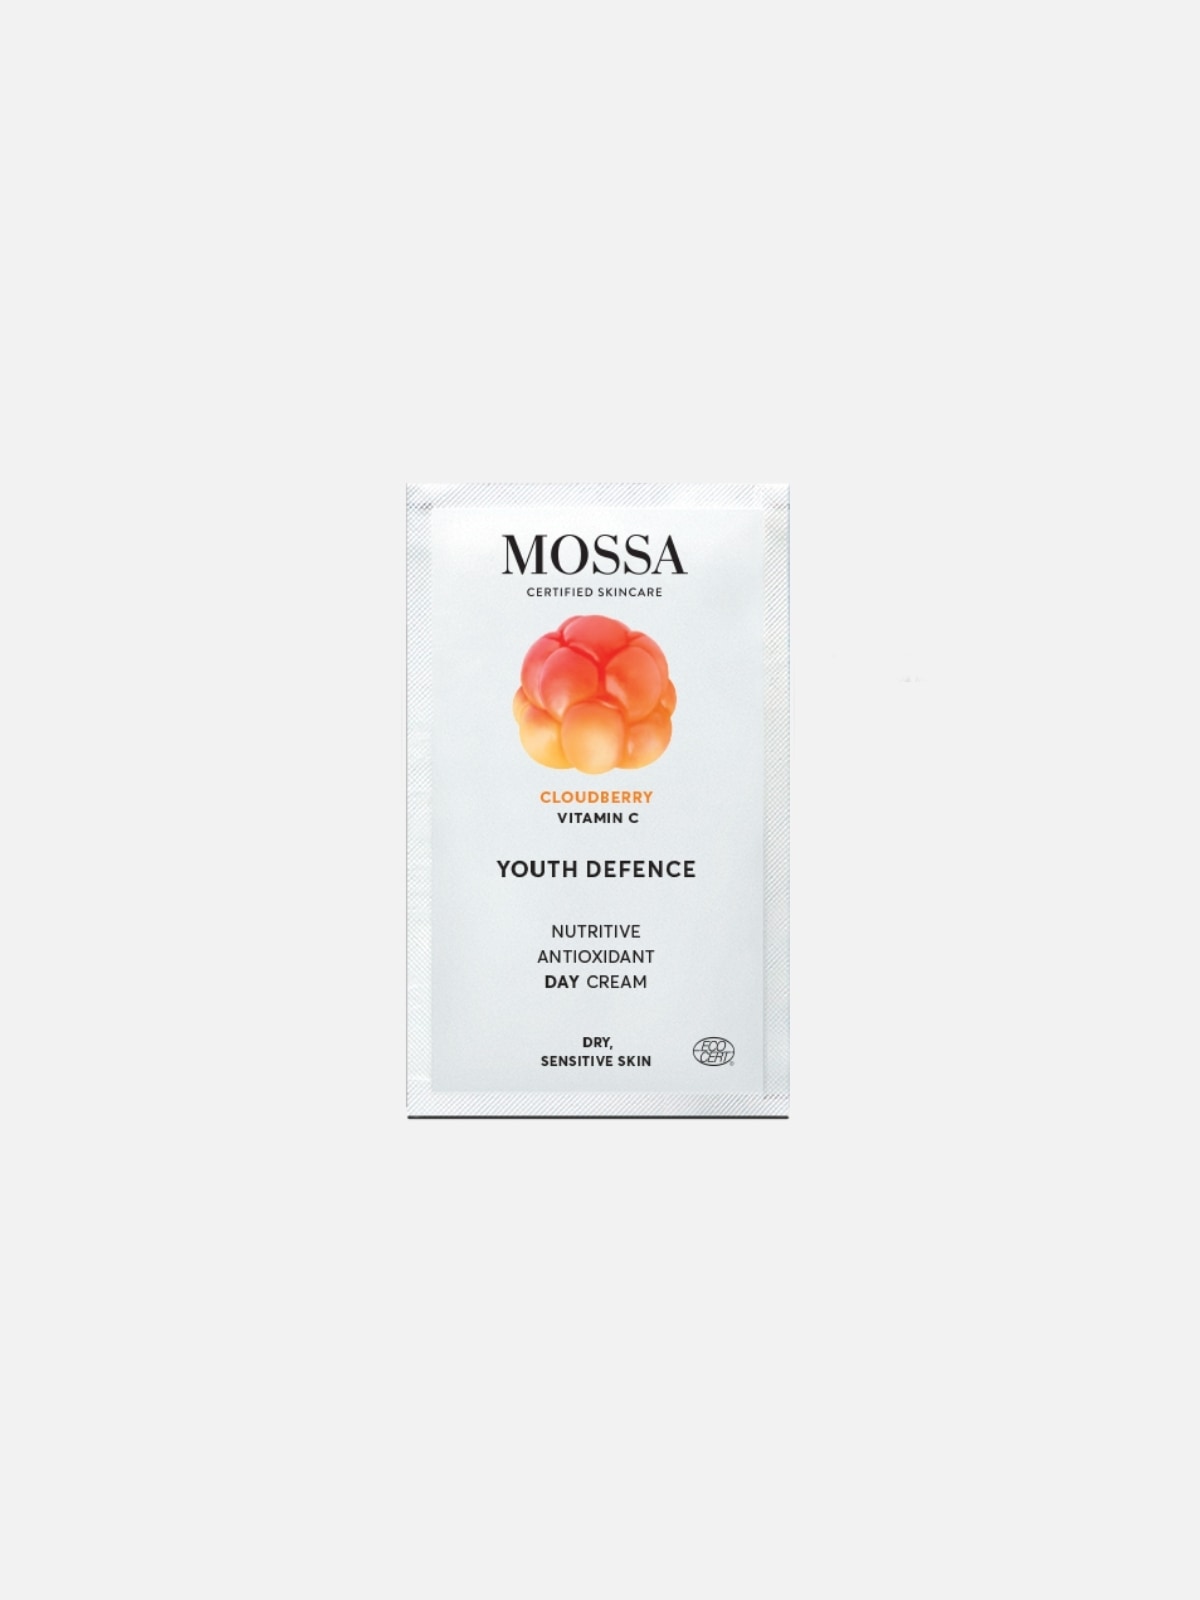 Mossa - Youth Defence Nutritive Antioxidant Day Cream